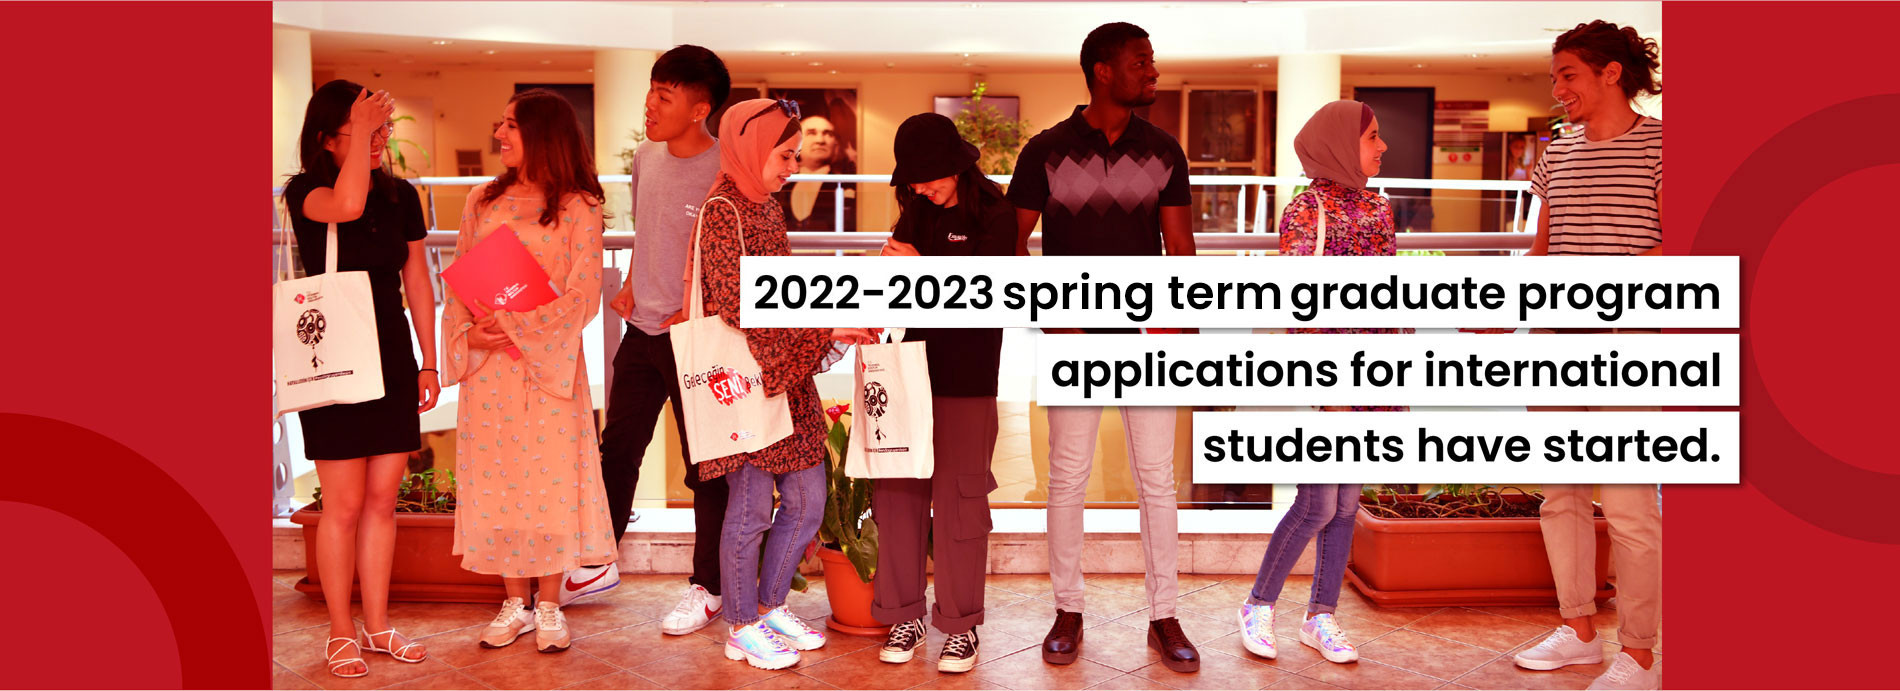 2022-2023 International Students Applications